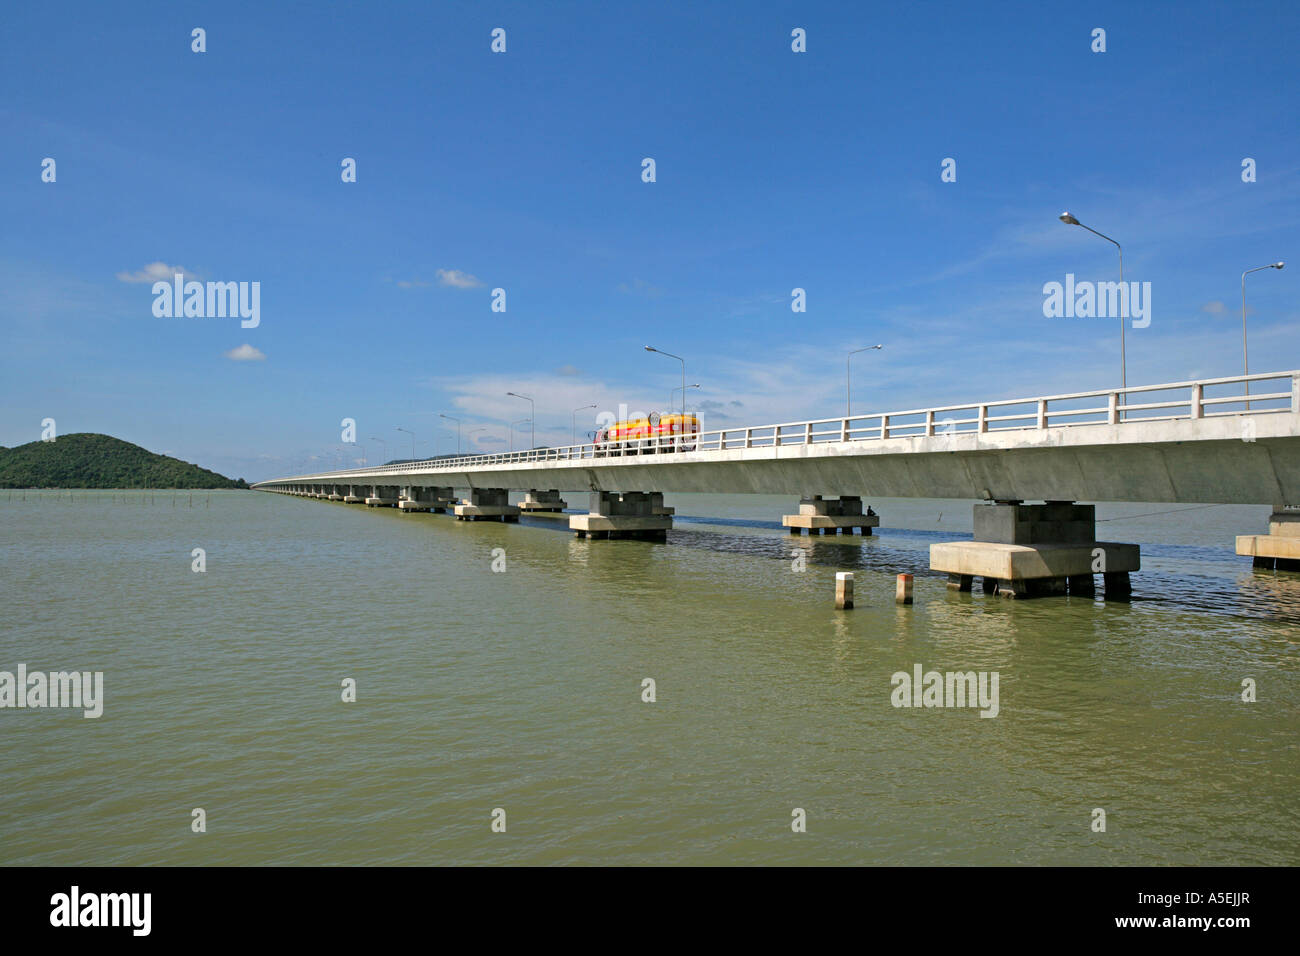 Thailand, Tinsulanond Bridge in Songklah Stock Photo